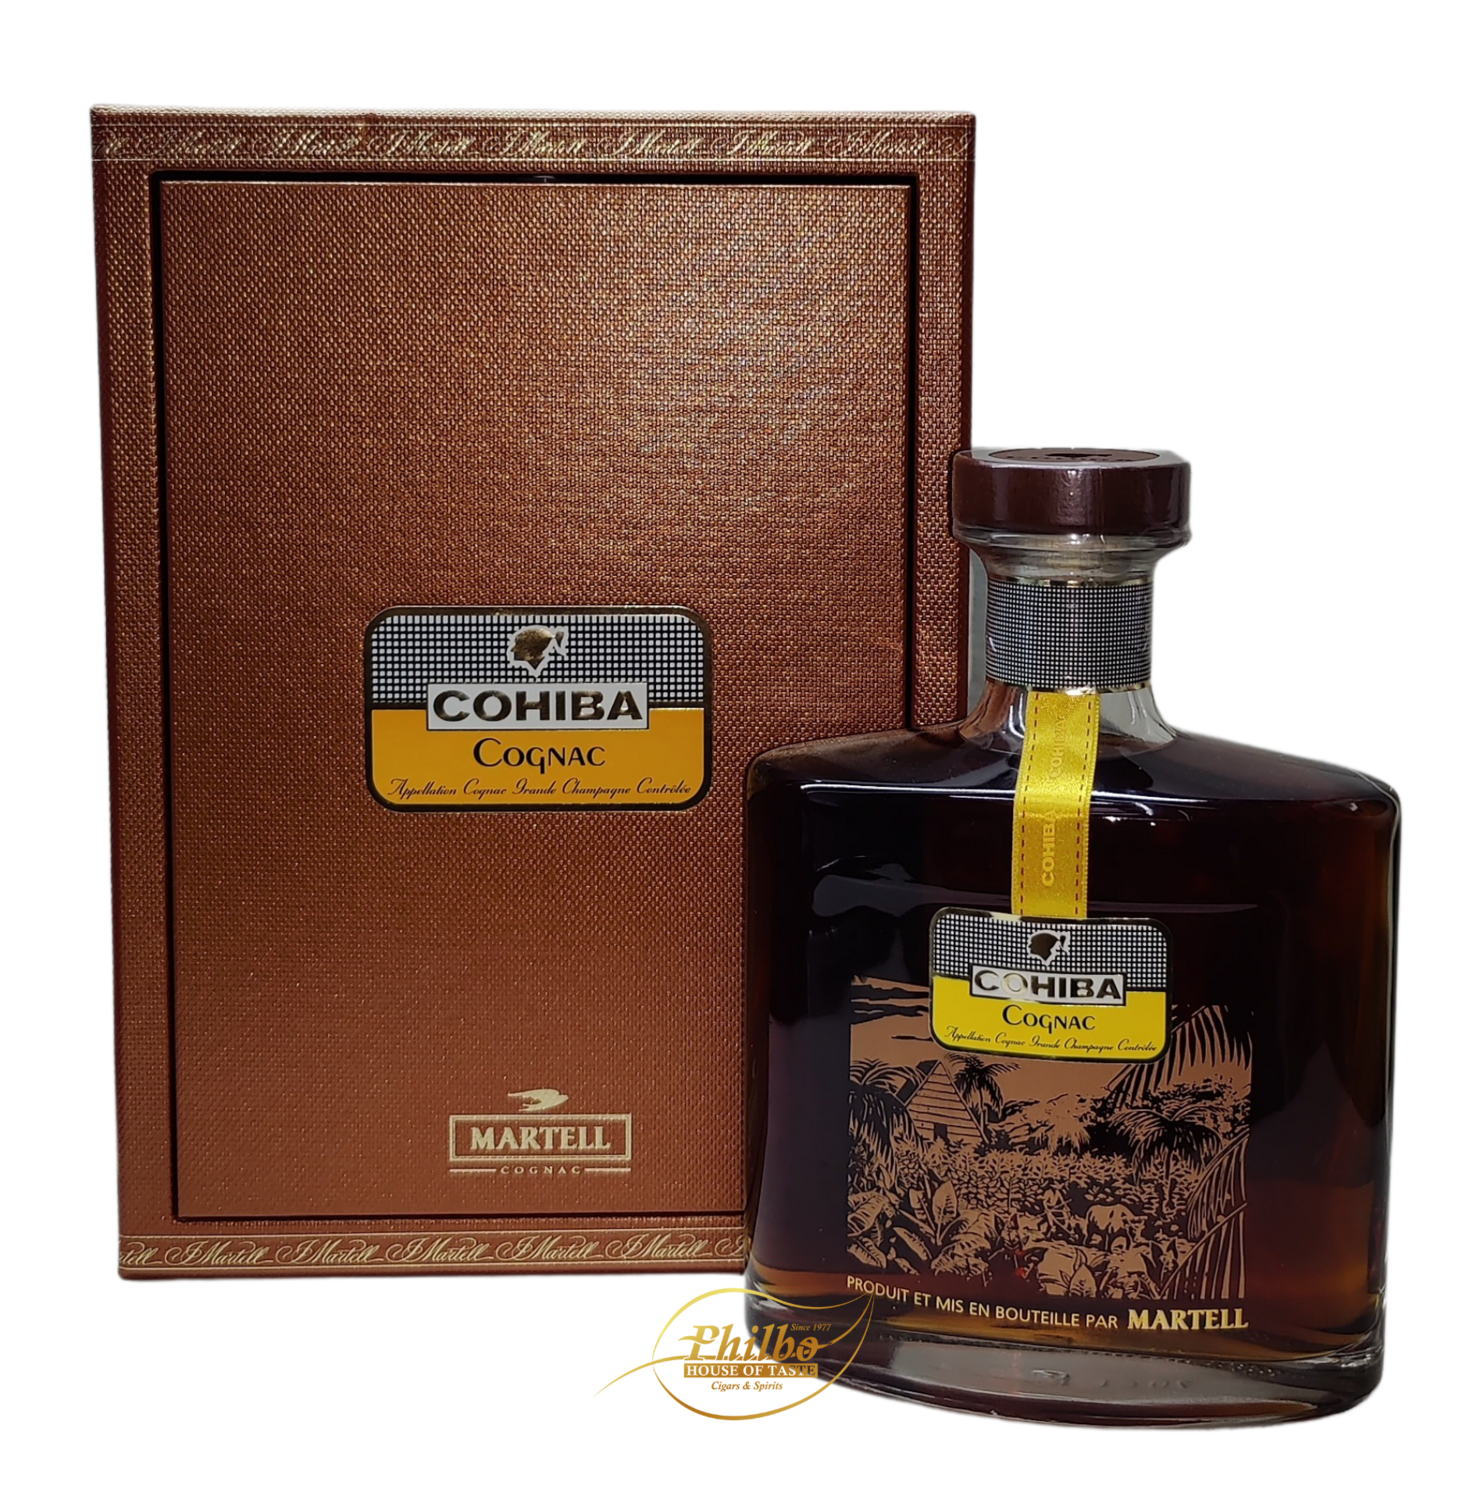 Martell Cohiba Cognac 70cl 43%